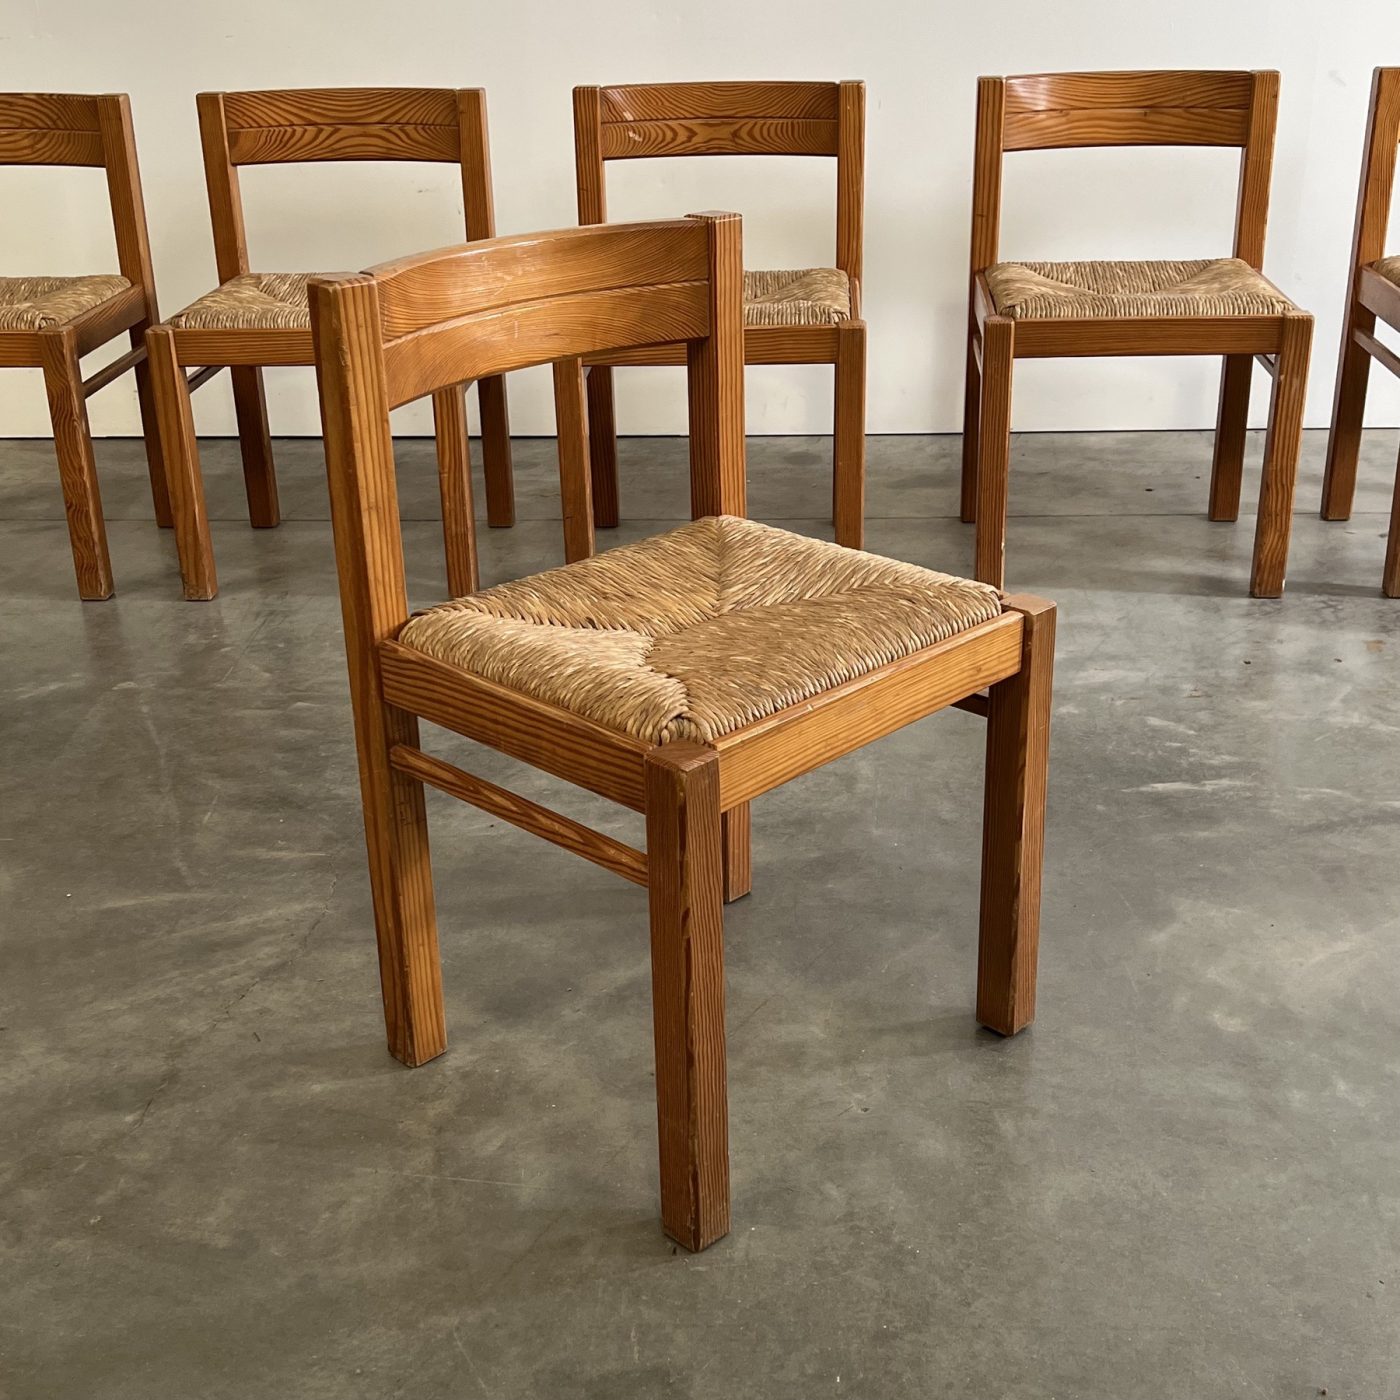 objet-vagabond-midcentury-chairs0004